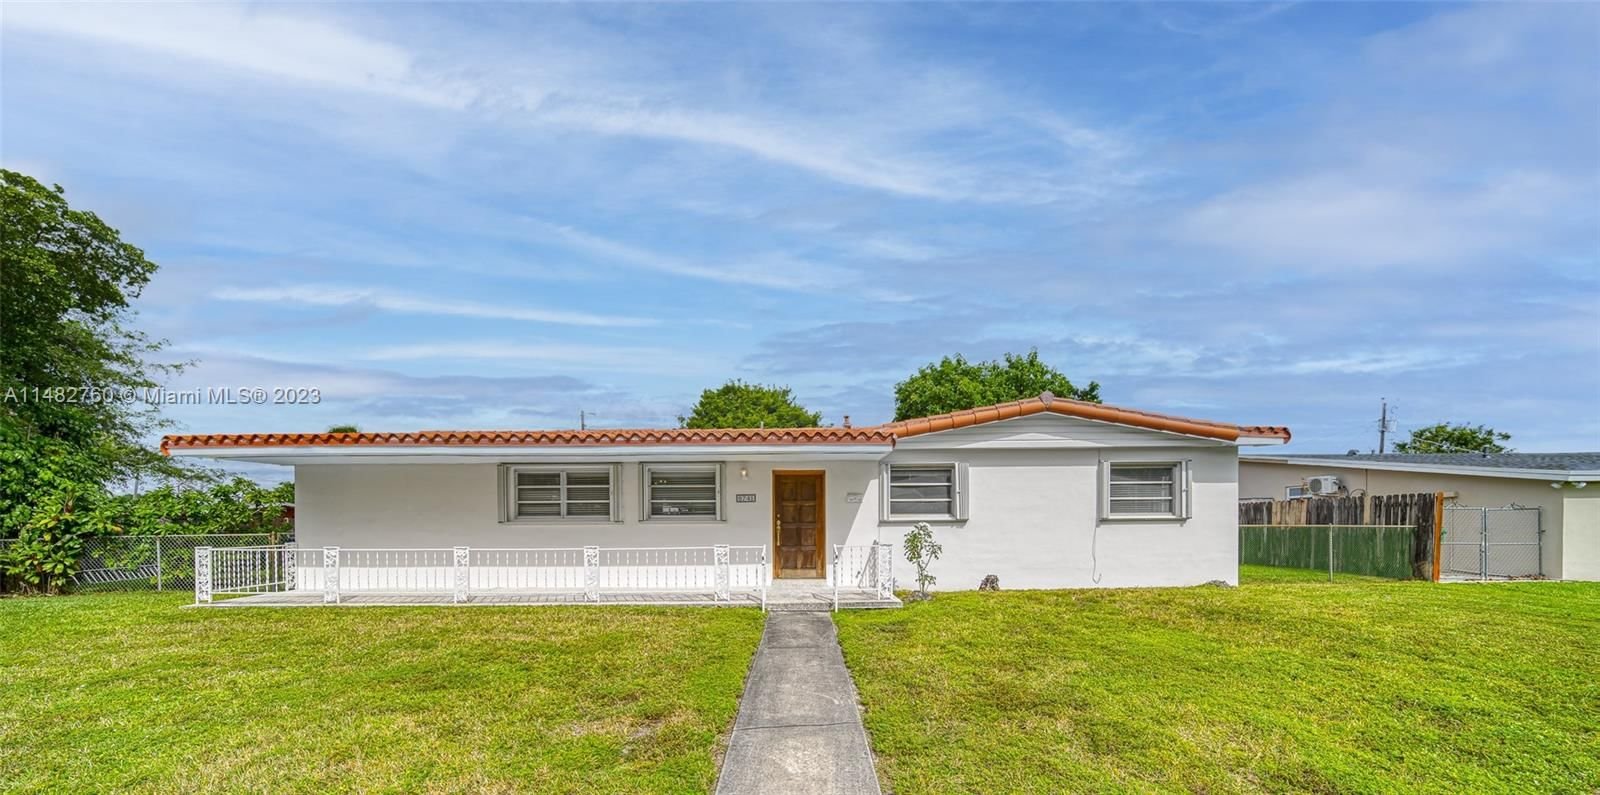 Real estate property located at 8741 20th Ter, Miami-Dade County, Miami, FL